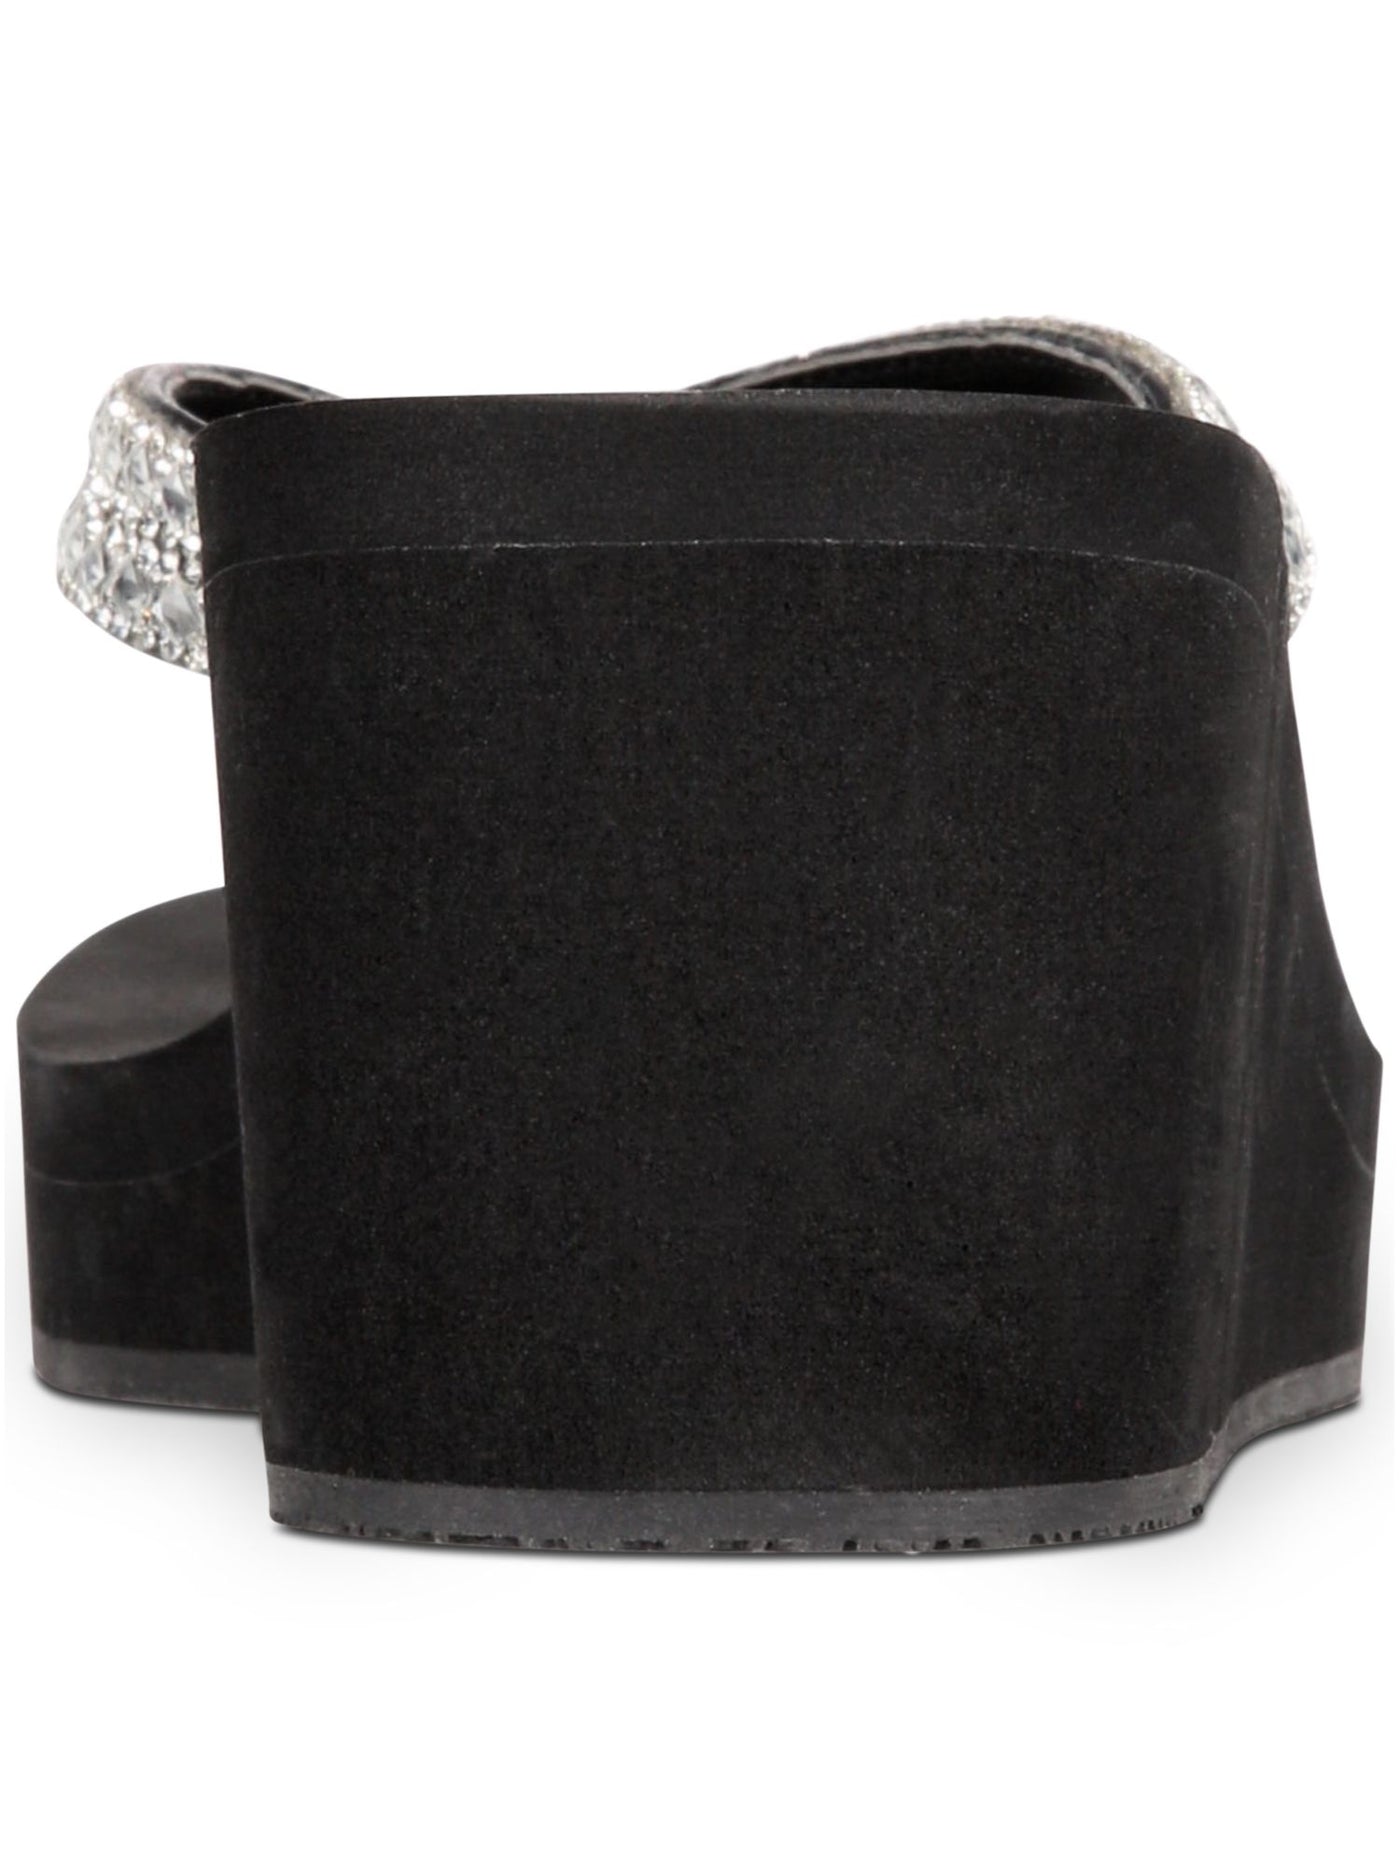 THALIA SODI Womens Black Rhinestone Embellishment Comfort Emira Round Toe Wedge Slip On Flip Flop Sandal 9 M